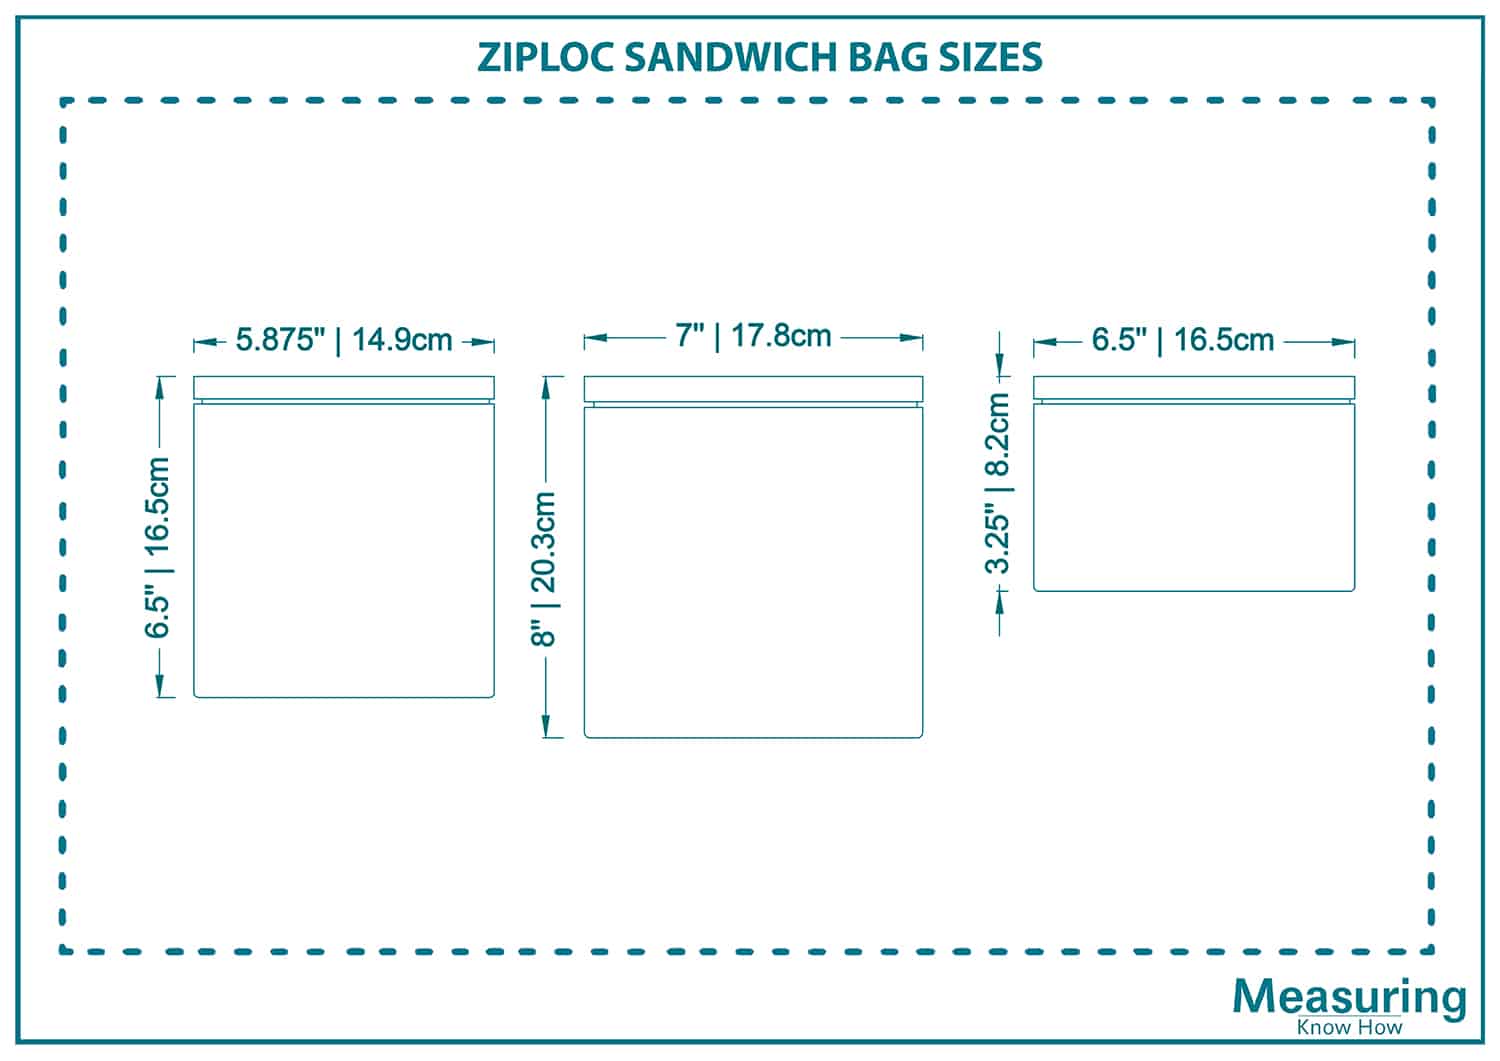 Ziploc sandwish bag sizes